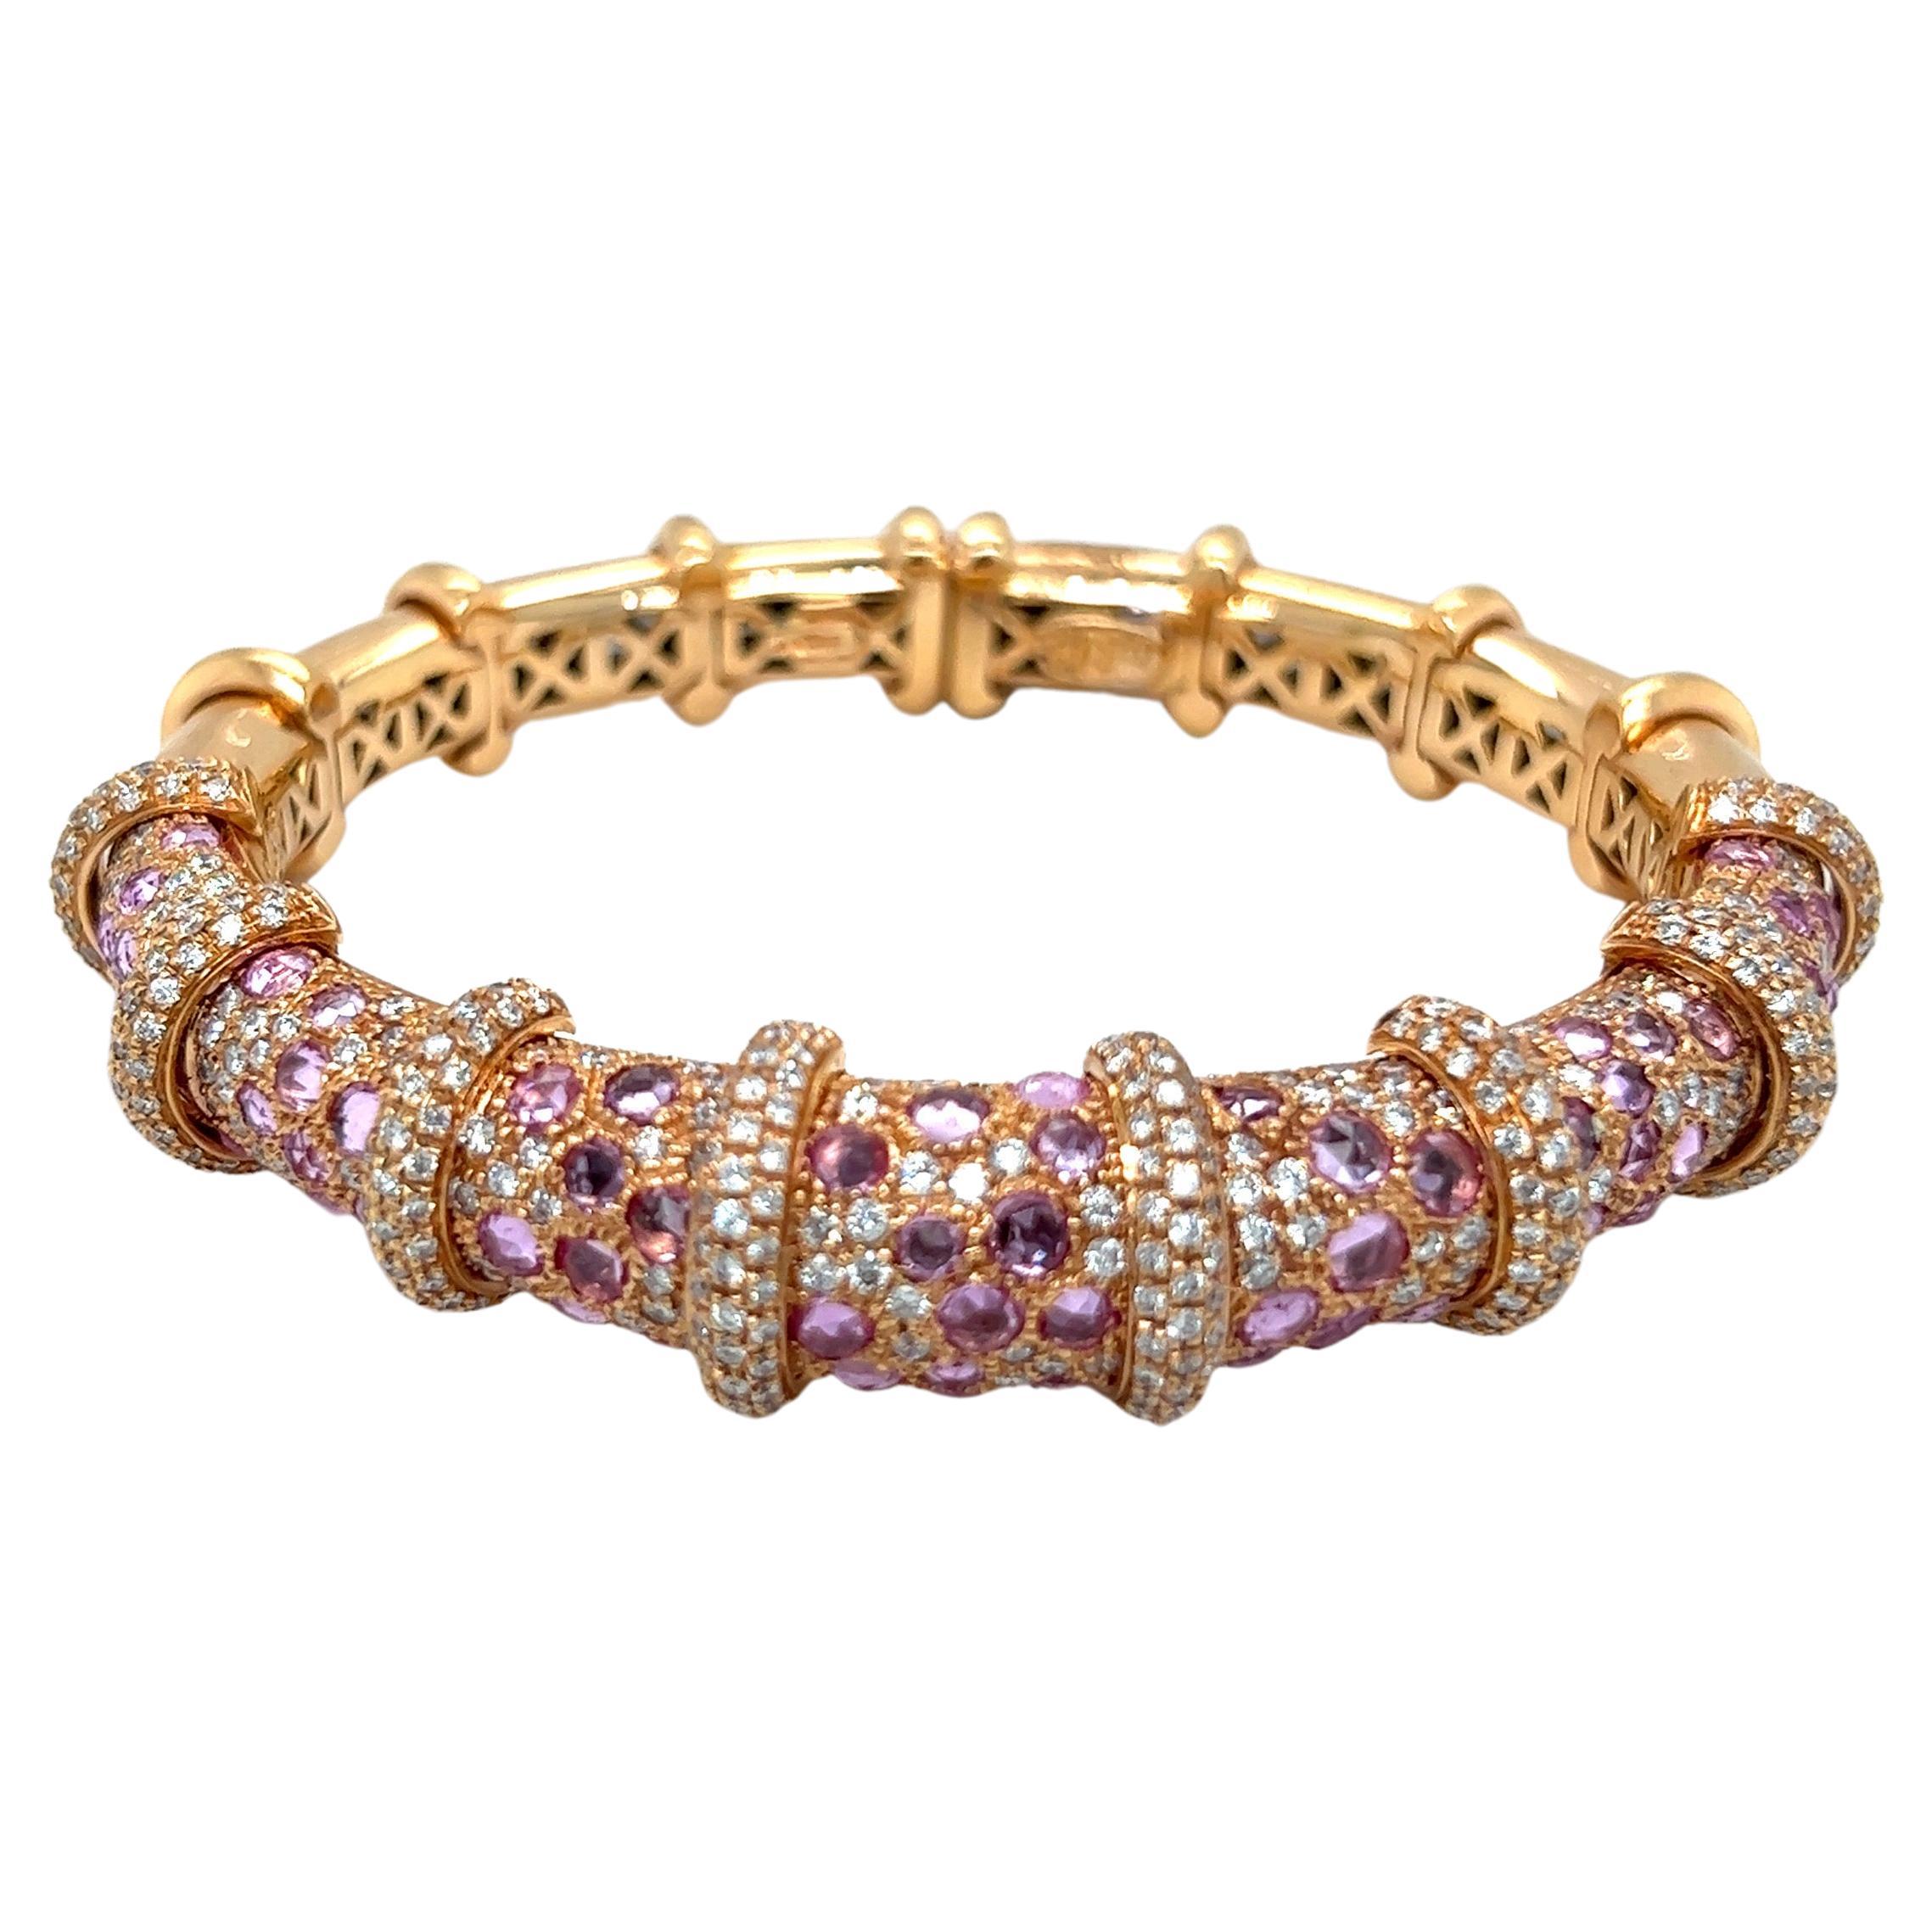 G.Verdi for Cellini 18 Karat Rg Bracelet 7.22cts Pink Sapphire 8.45cts, Diamonds